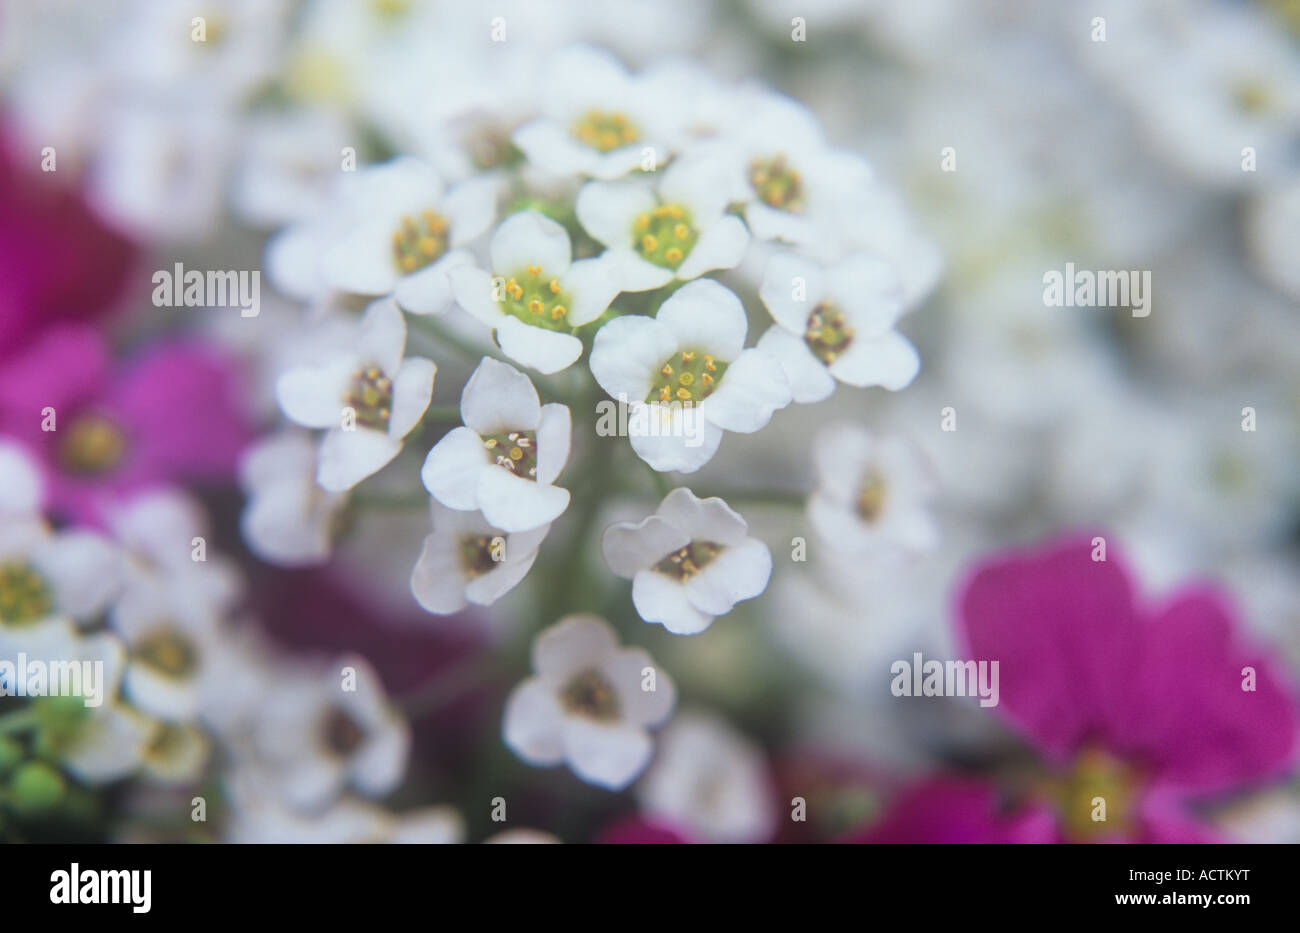 Close up of stem of tiny white flowers with yellow stamens of Sweet alyssum or Lobularia maritima with mauve Aubretia Stock Photo